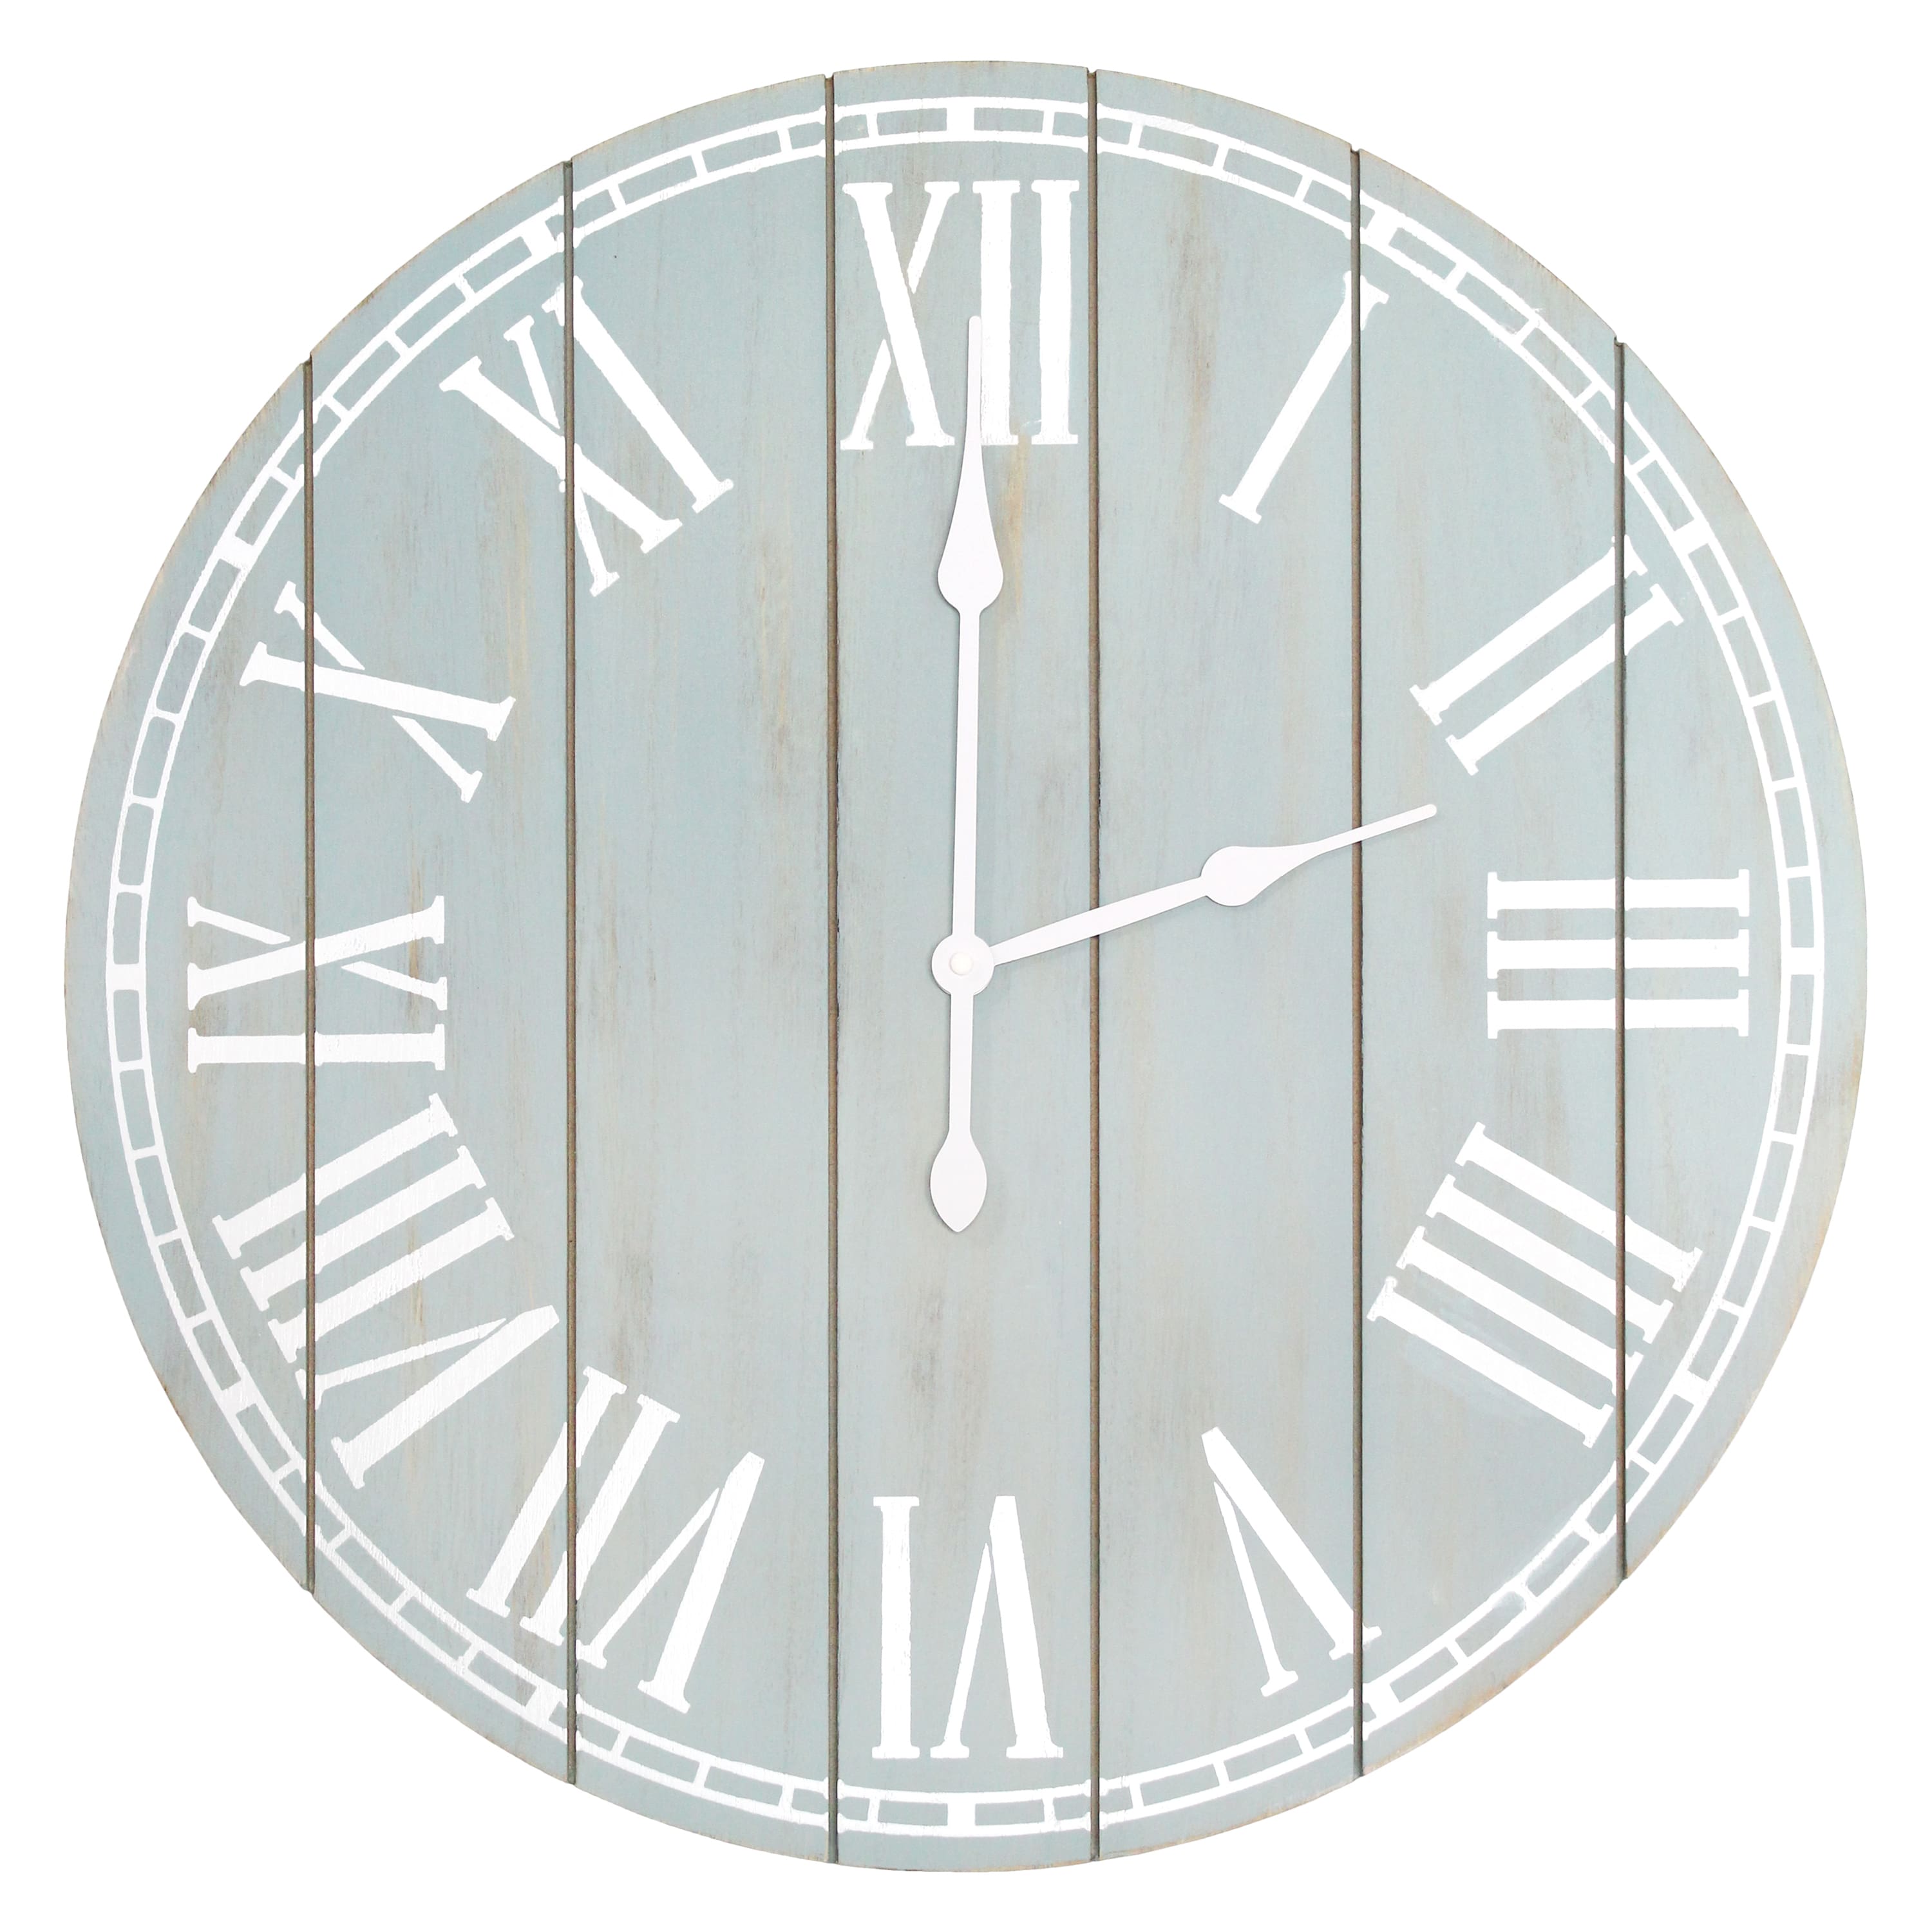 Elegant Designs 23" Wood Plank Coastal Wall Clock